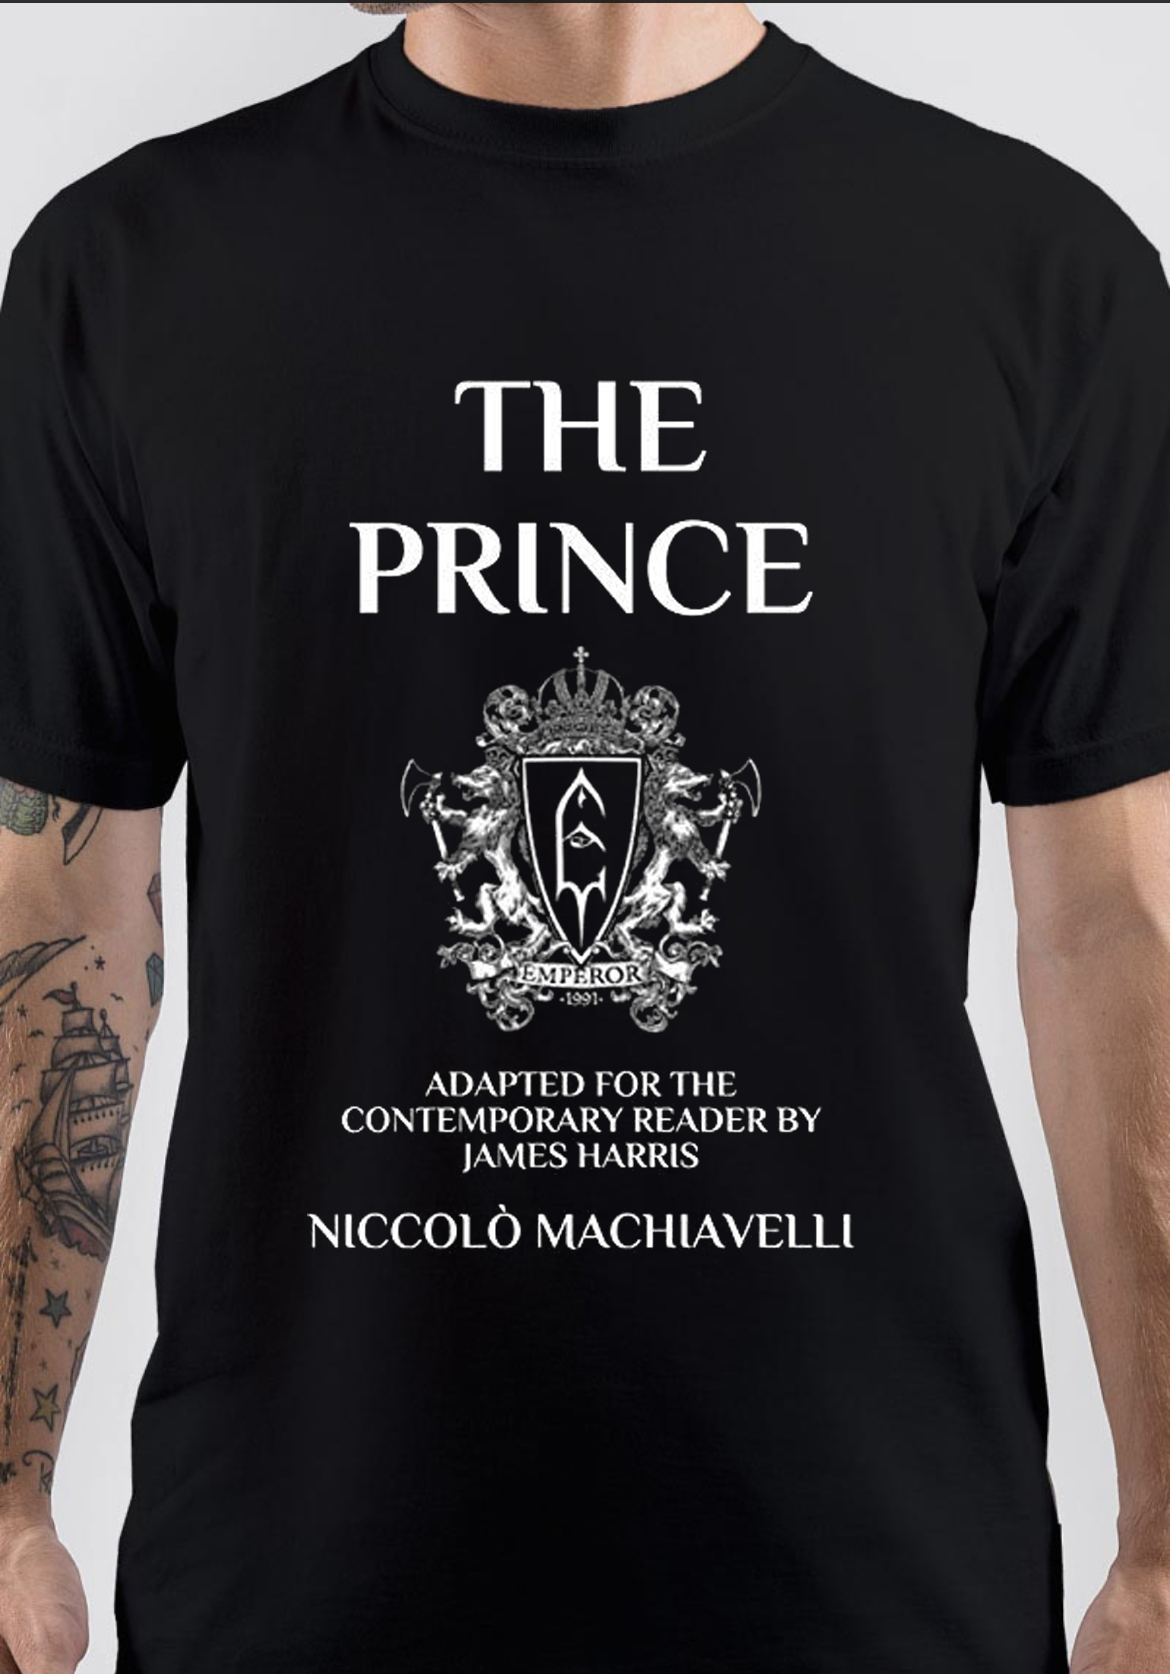 Niccolo Machiavelli T-Shirt And Merchandise